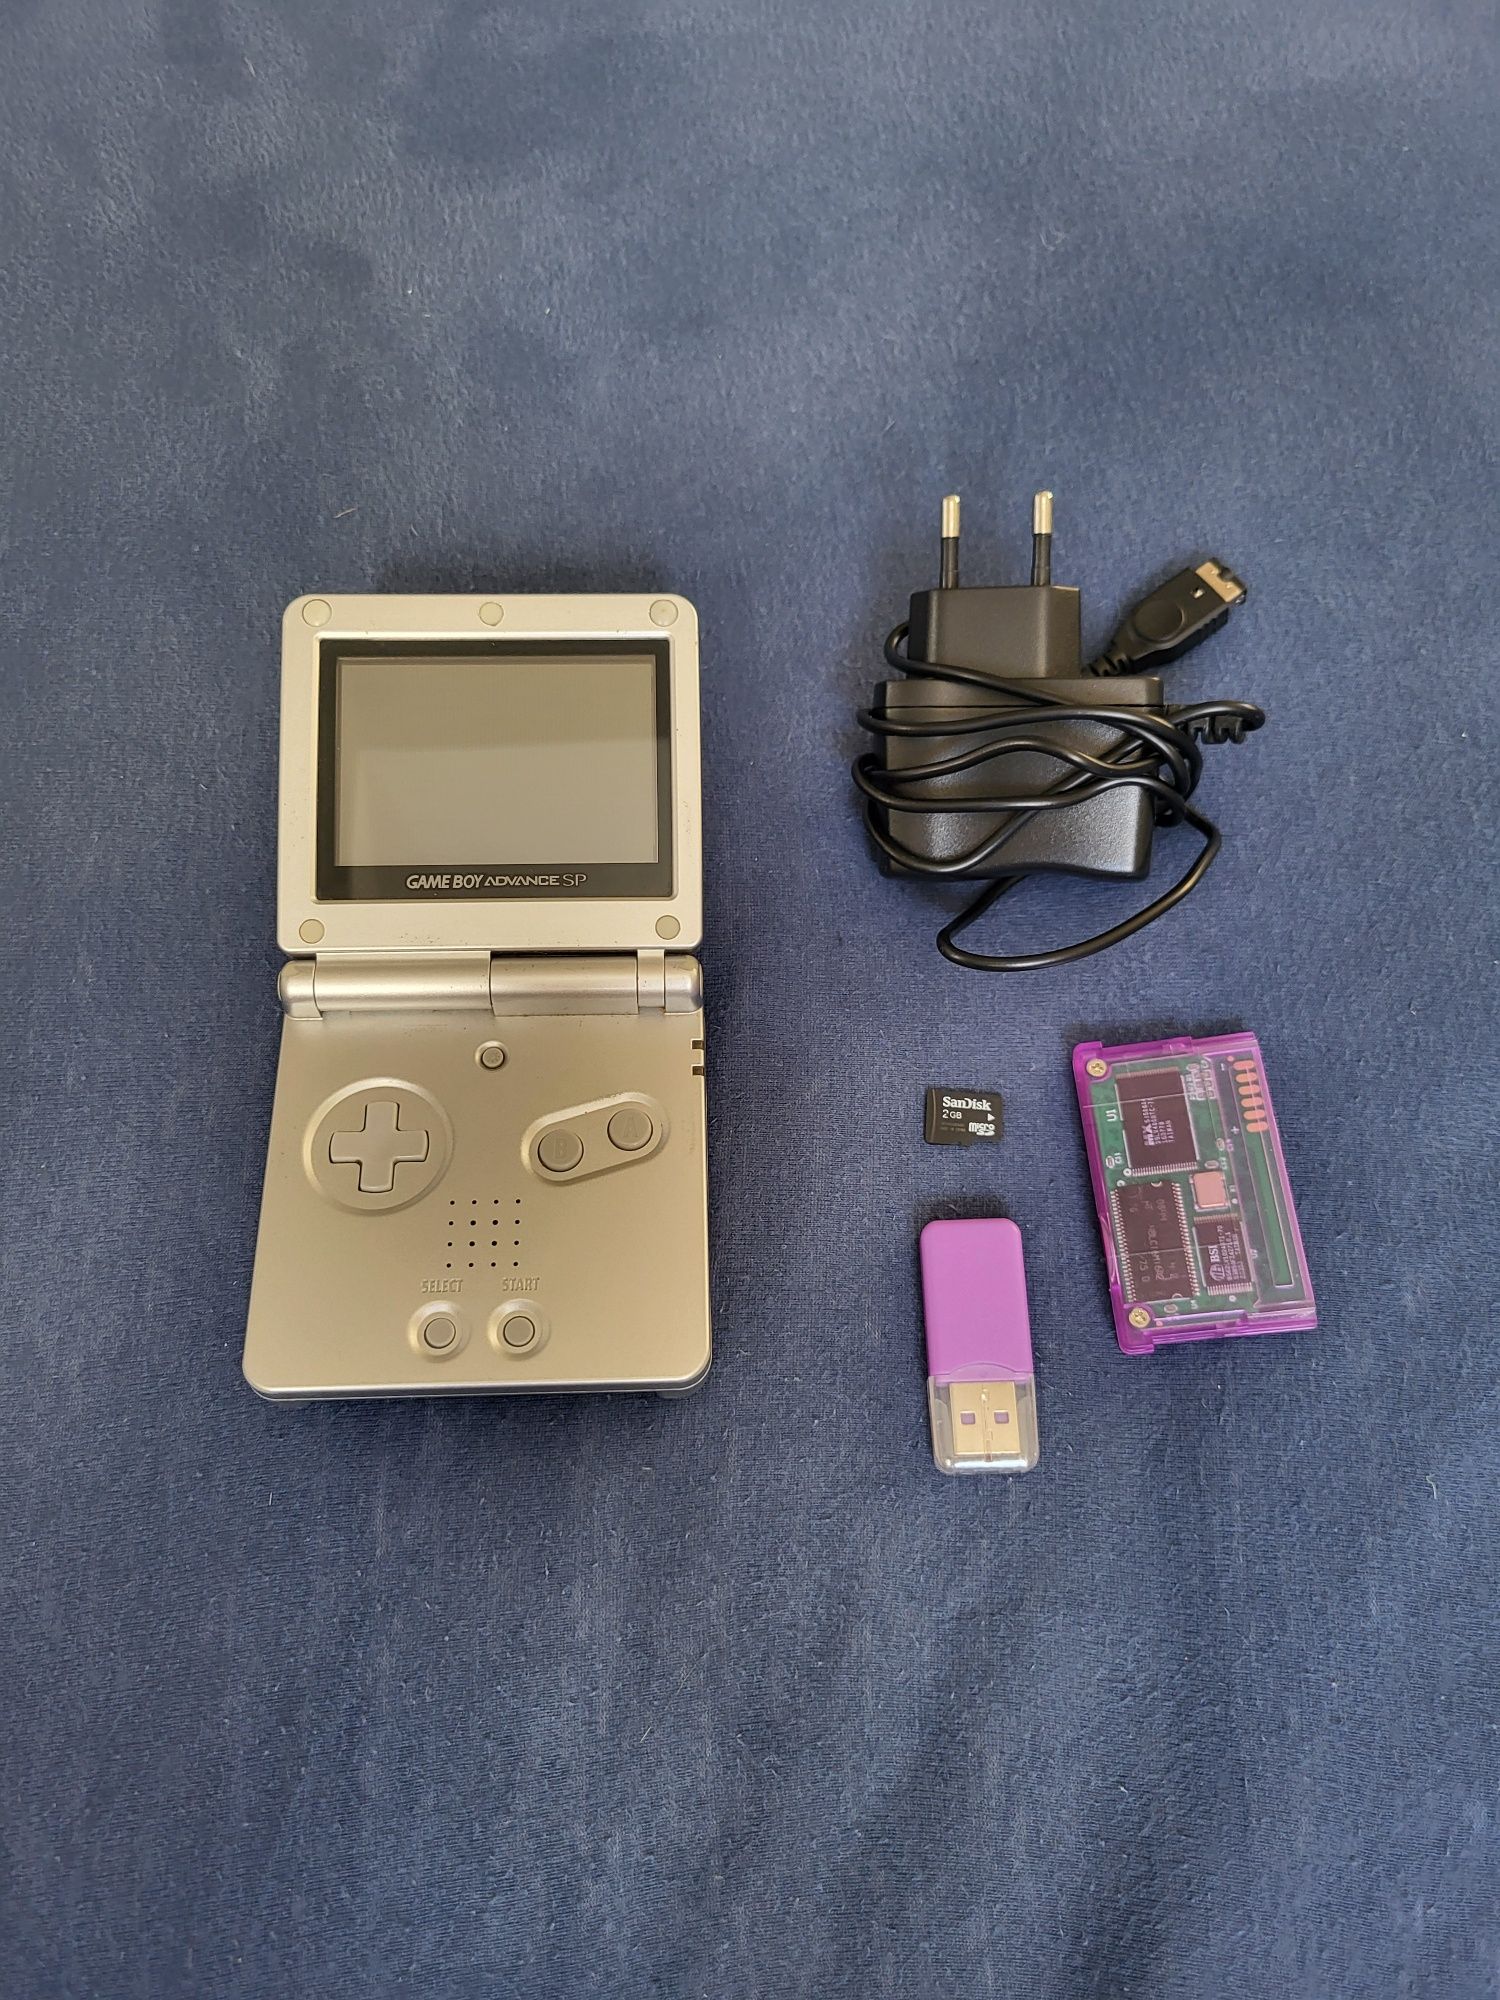 Game Boy Advance SP z dodatkami.